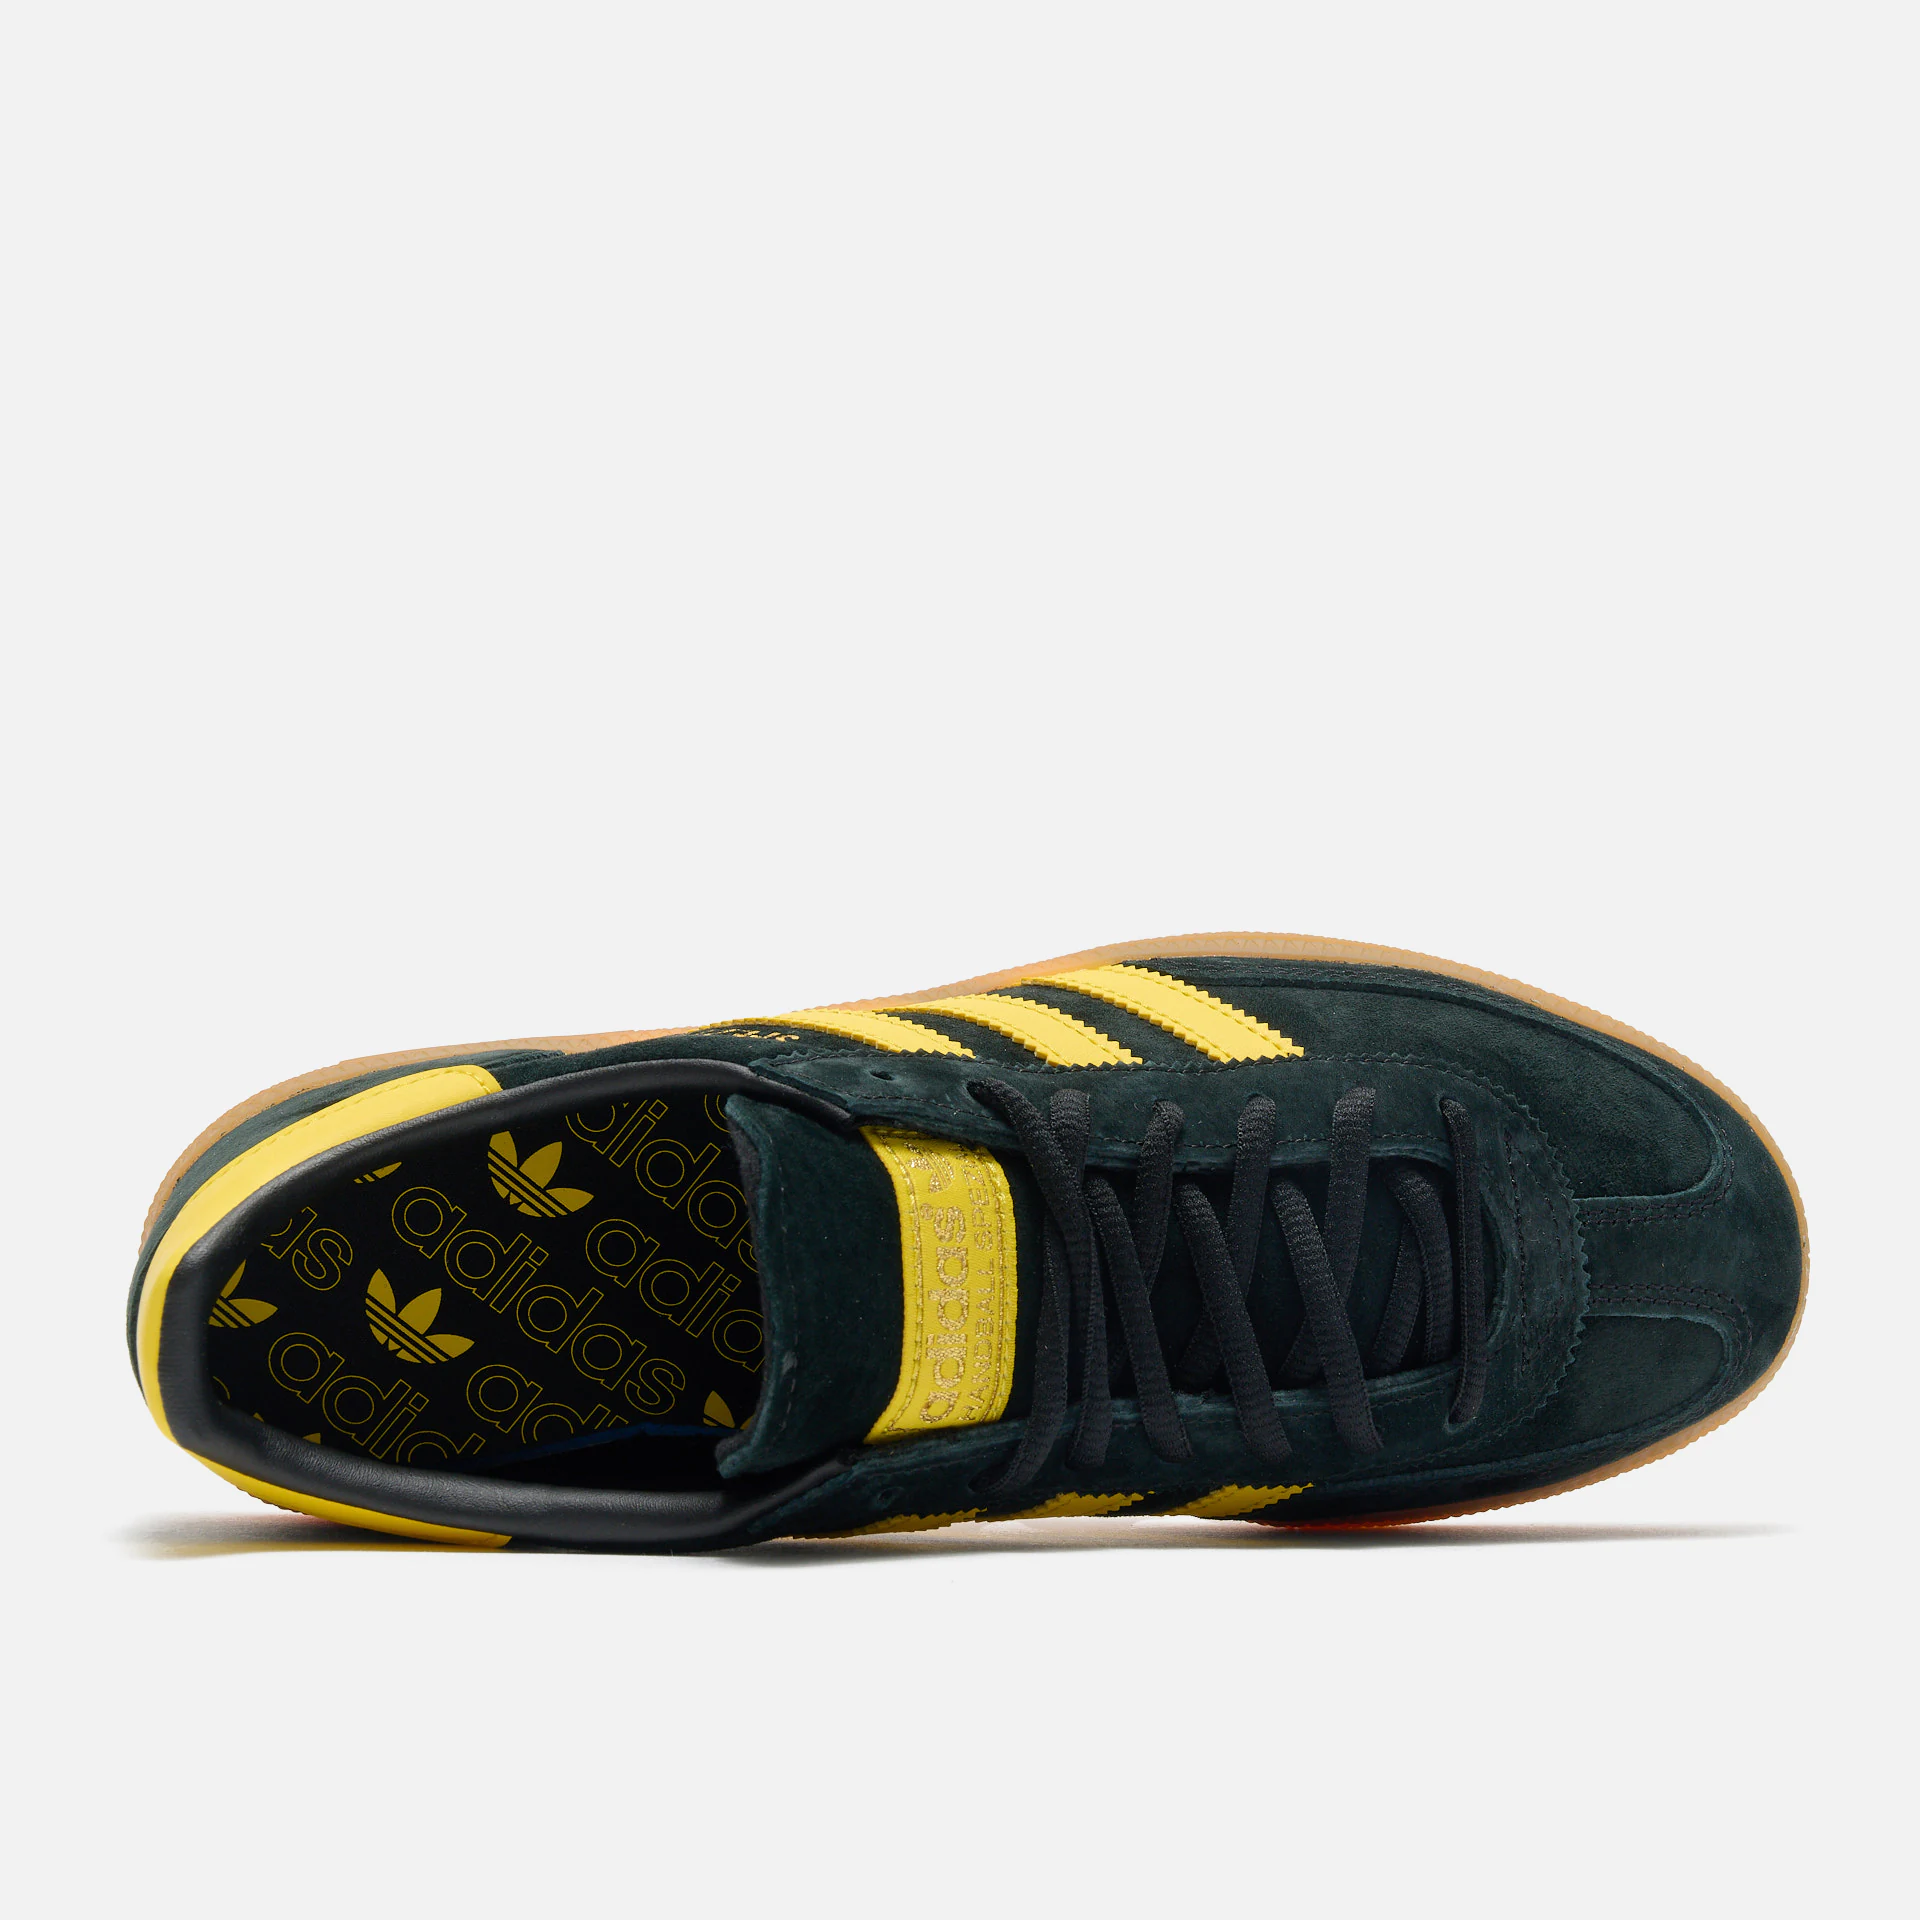 adidas Originals Handball Spezial Sneaker Black/Yellow/Gold